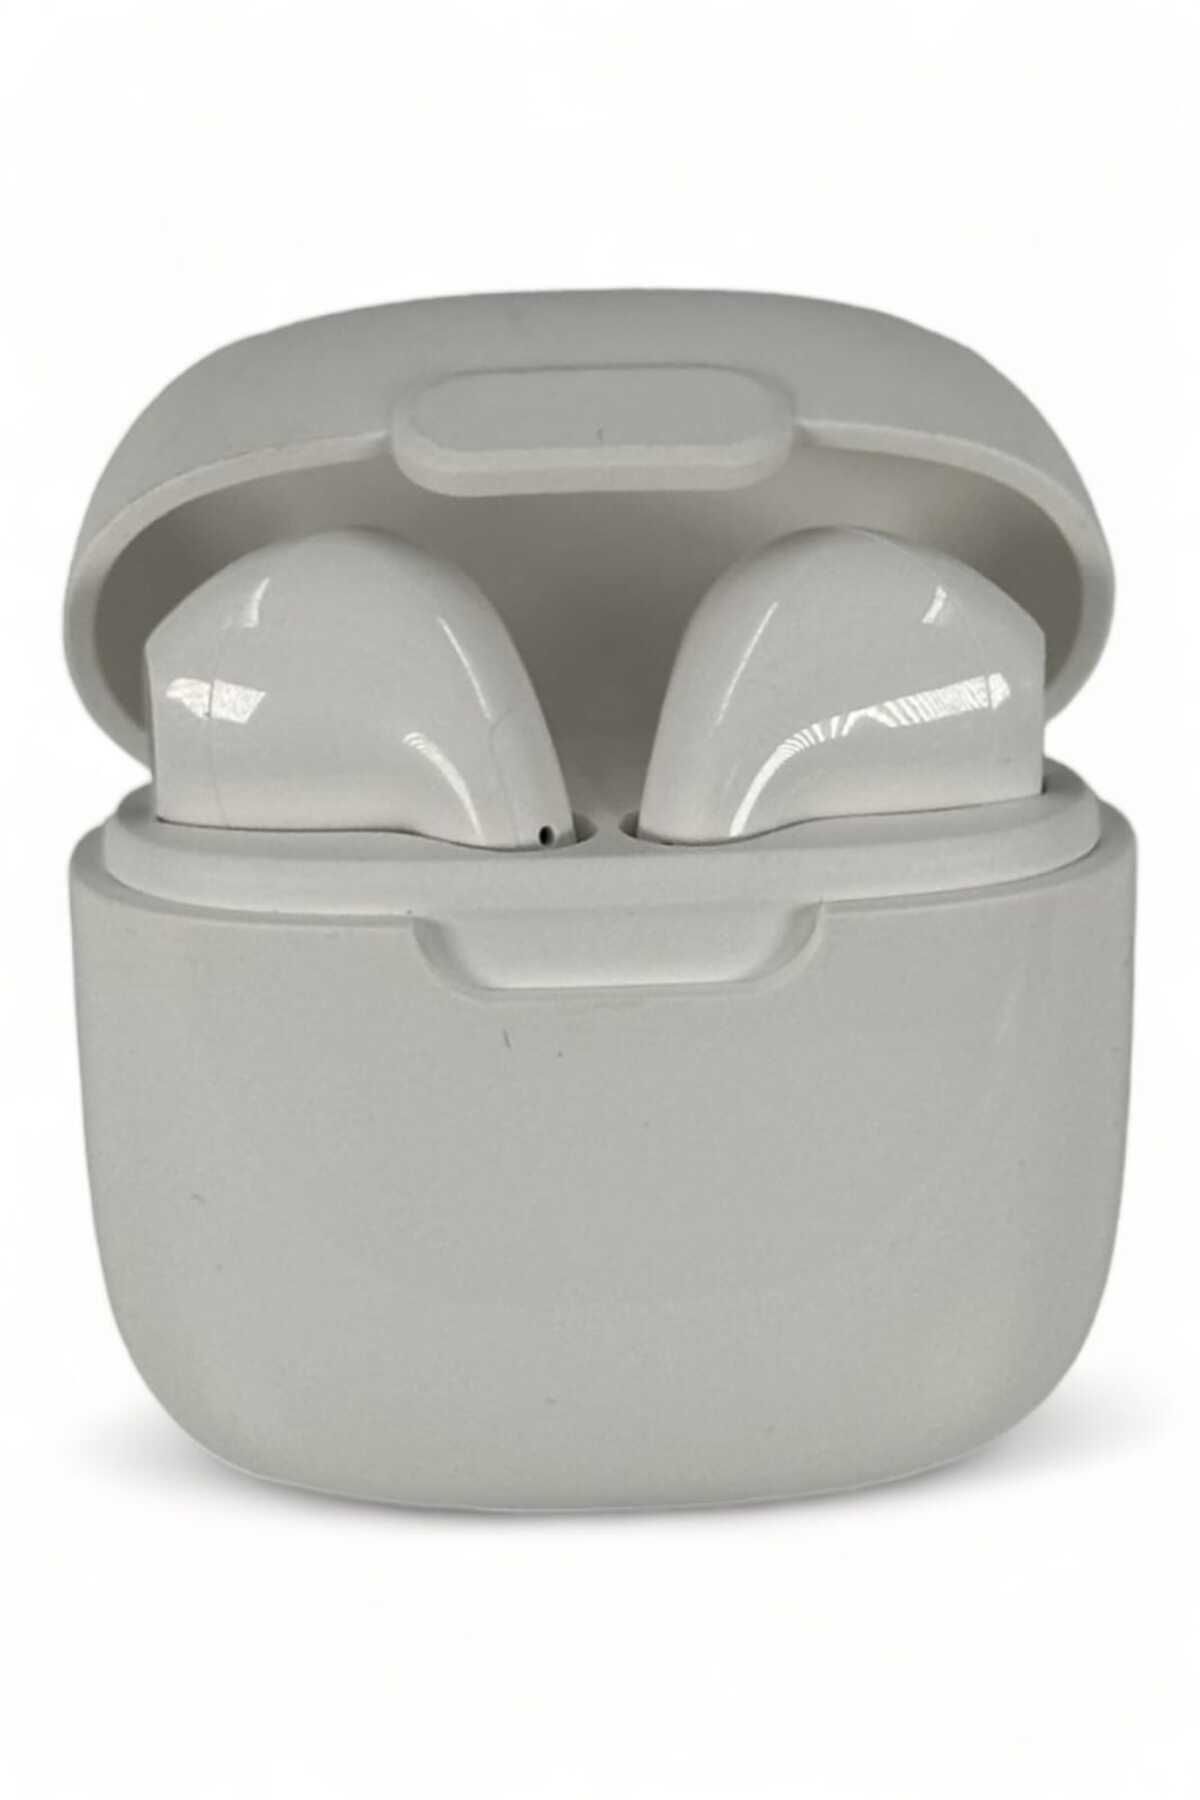 Ocado Pro 10 Beyaz Tüm Telefonlar Ile Uyumlu Dokunmatik Bluetooth Kulaklık 8d Stereo Hd Ses